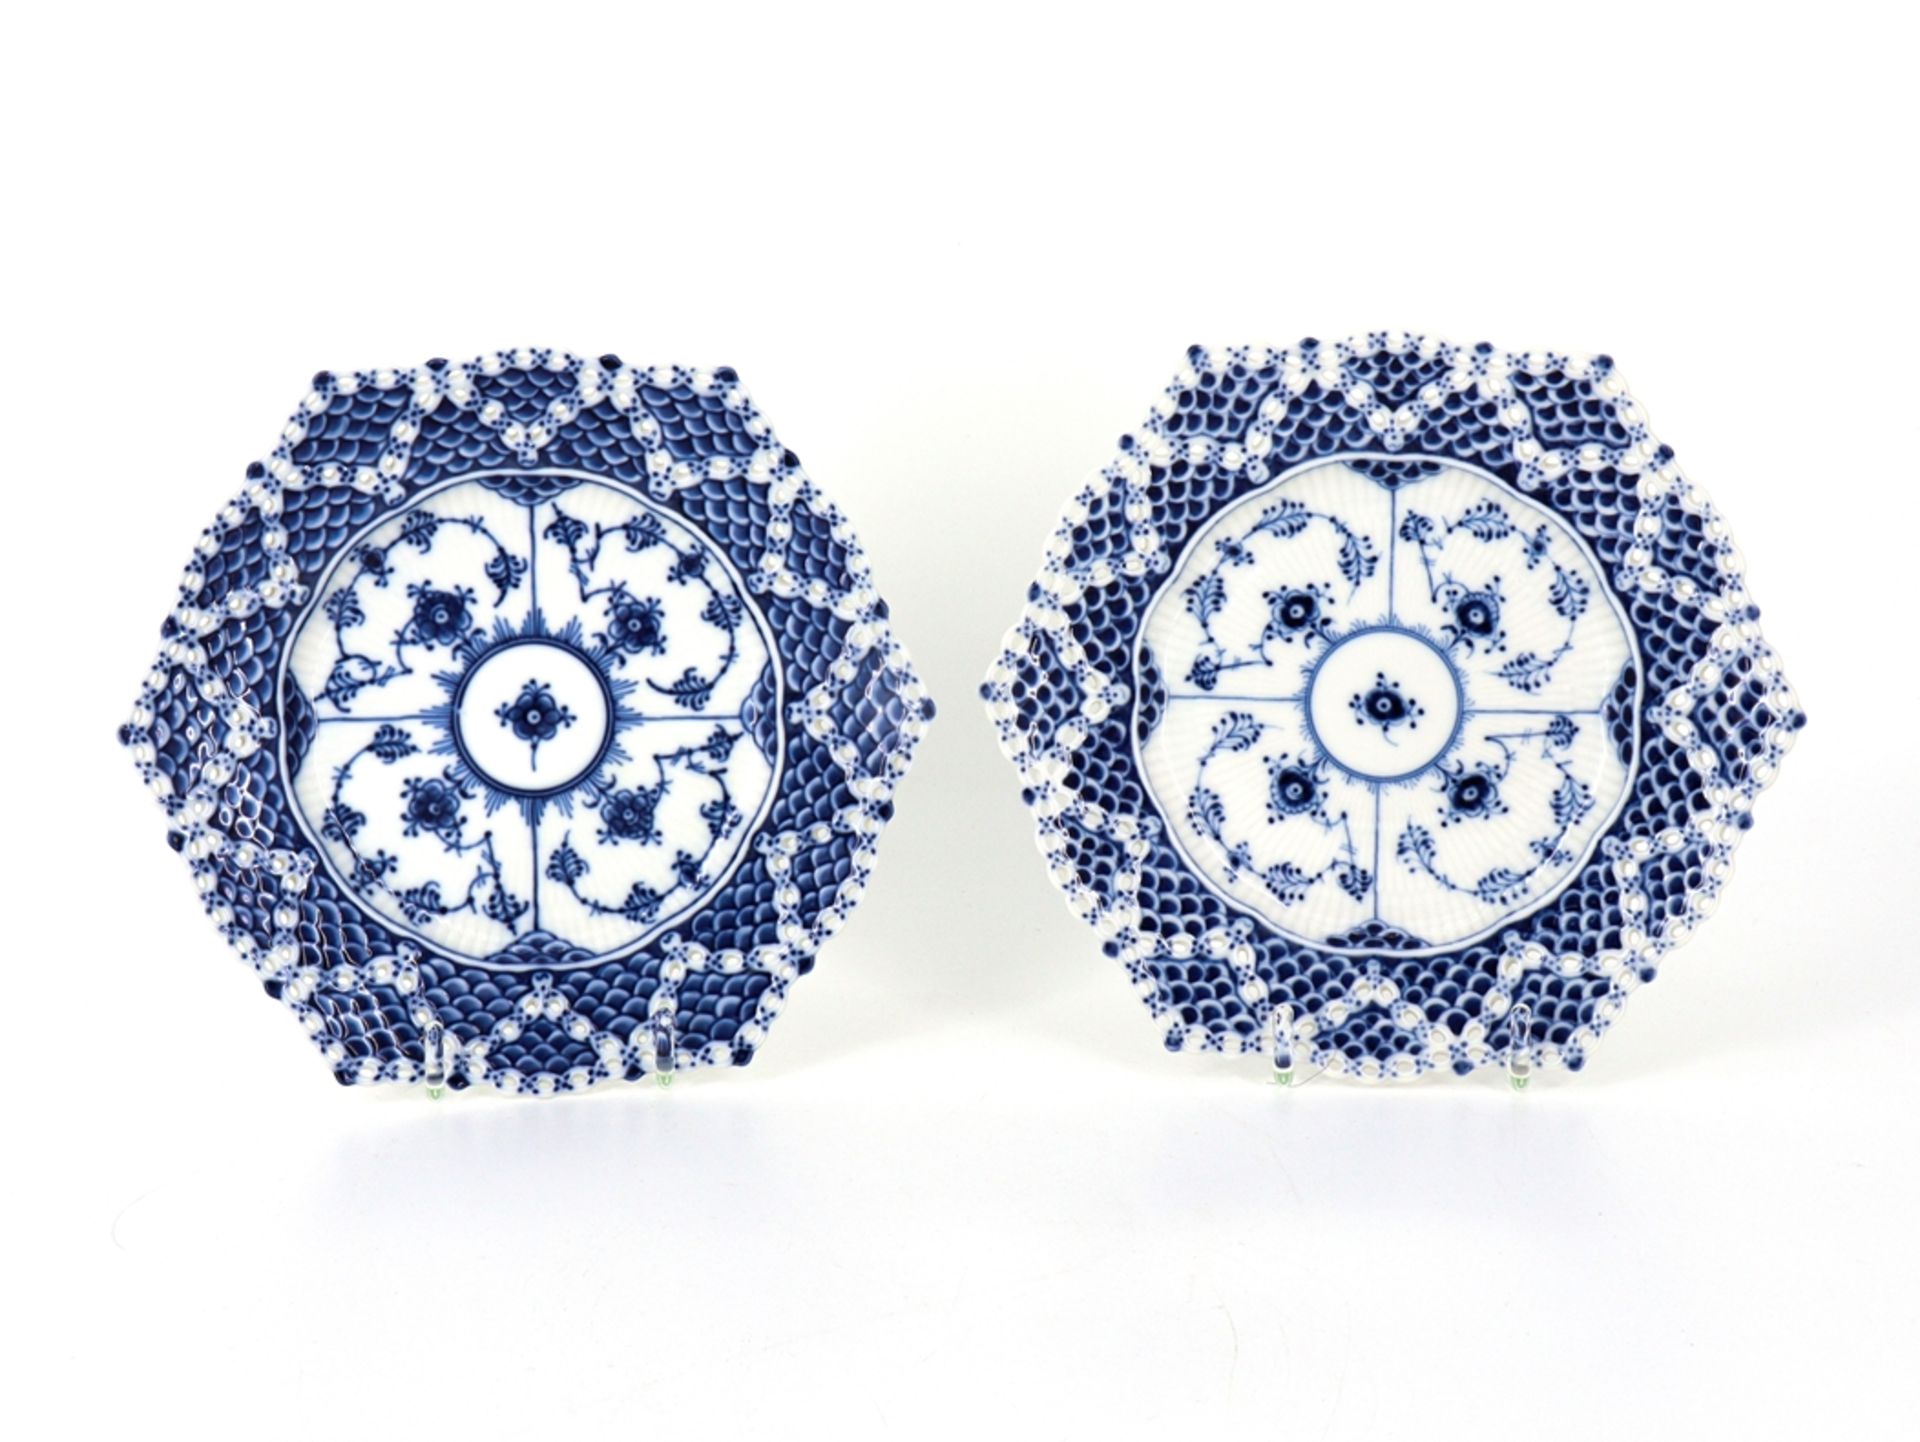 2 Royal Copenhagen Musselmalet full lace cake plates, model number: 1094 - Image 5 of 5